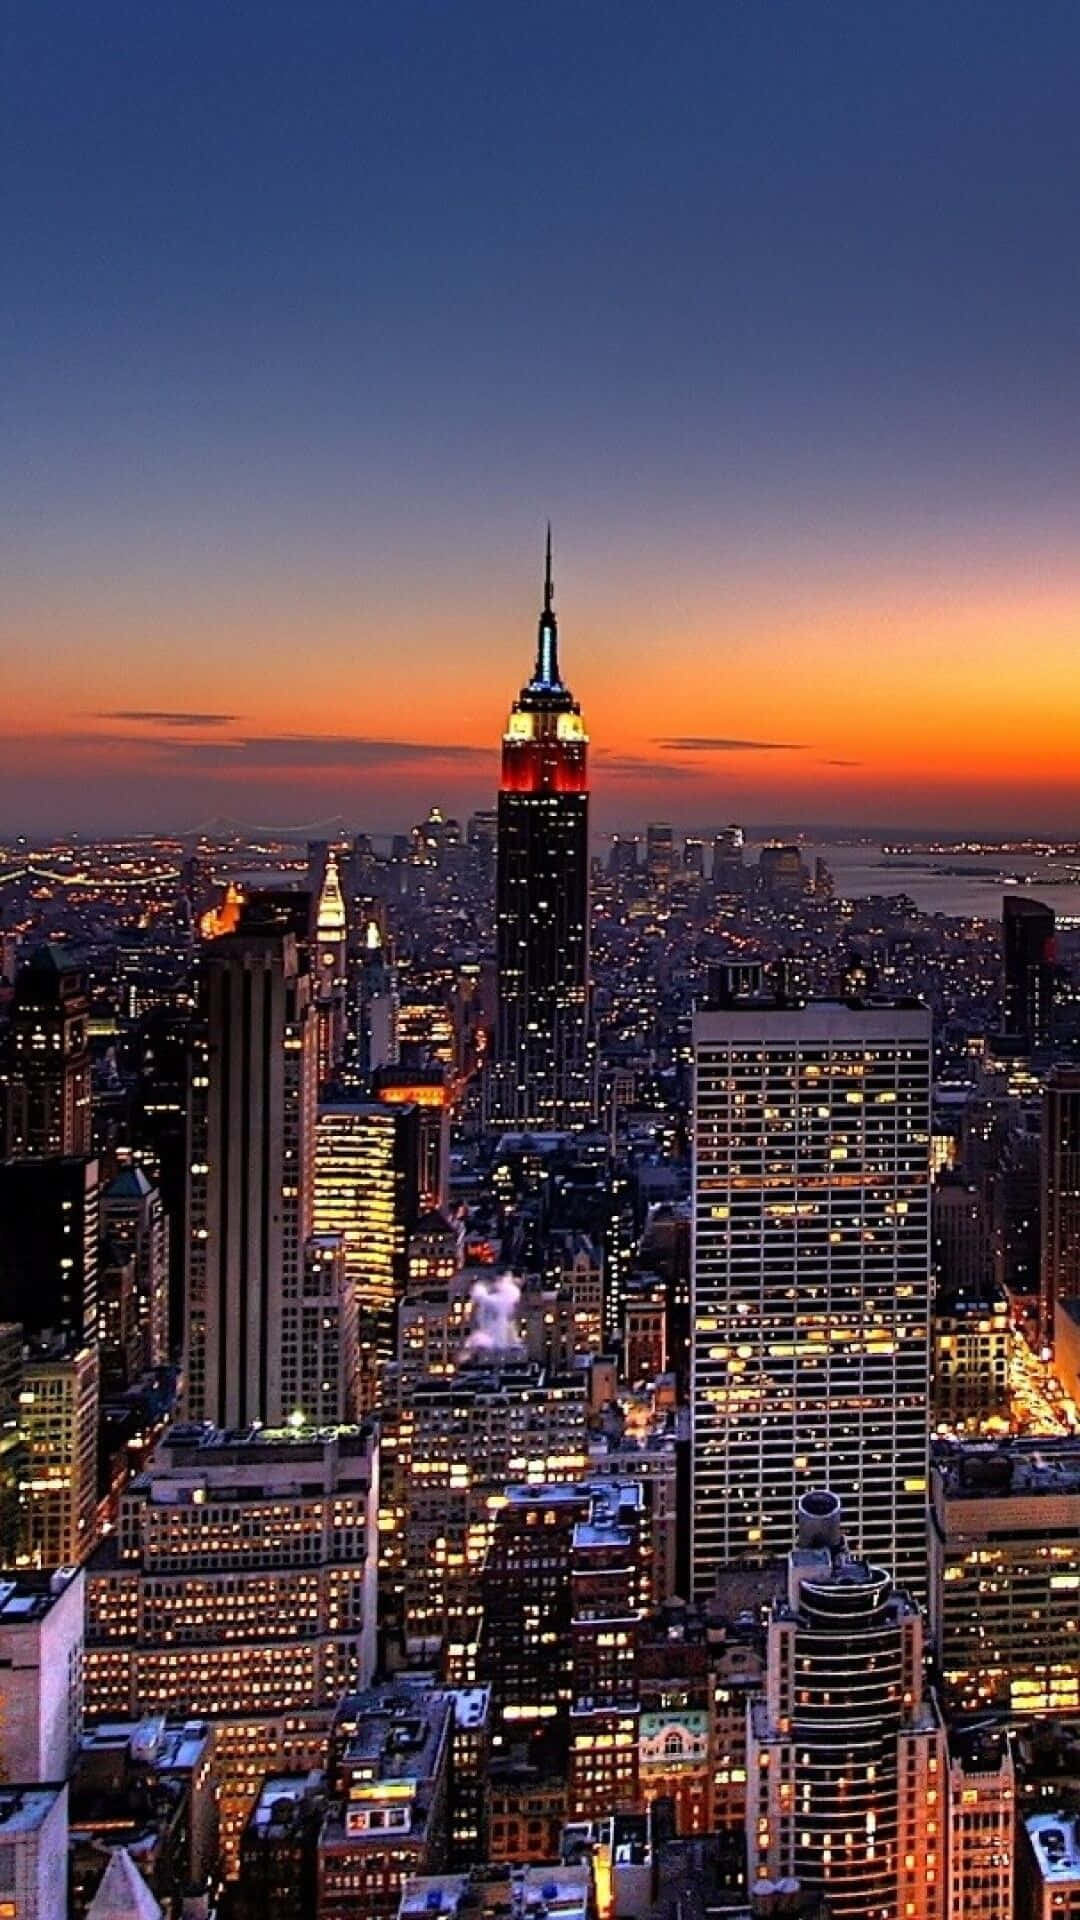 Fang City of Dreams - Iphone Xs i New York